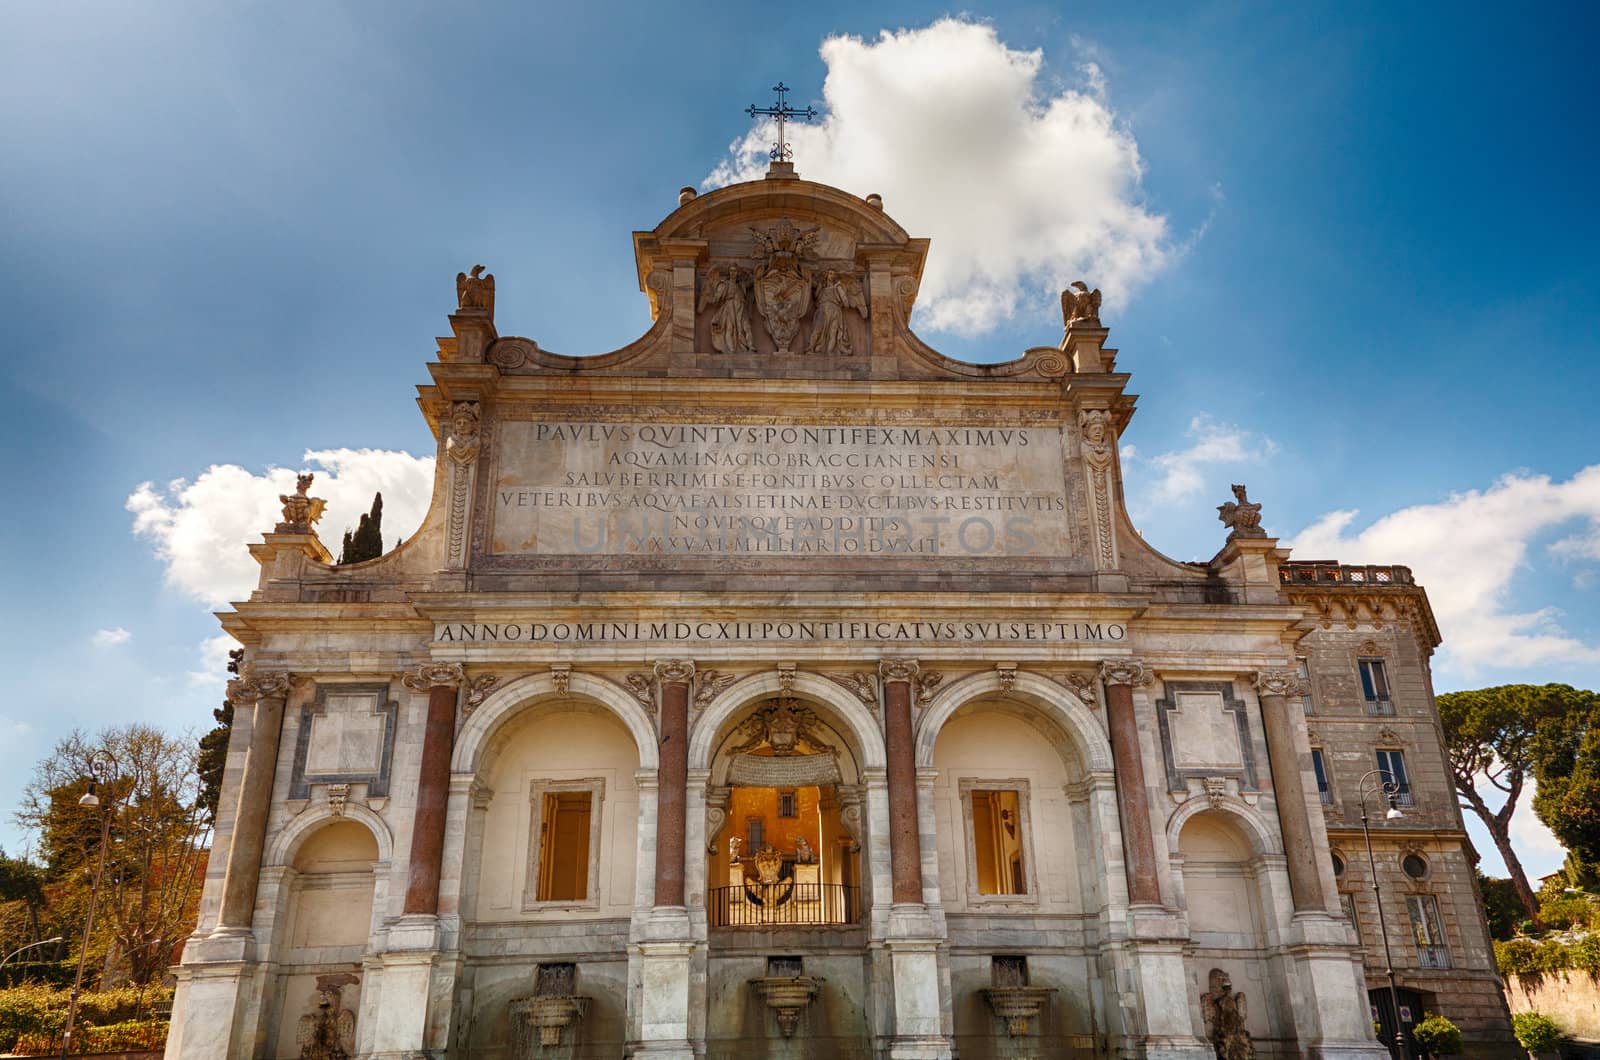 Fountain of Acqua Paola in Rome by shamtor